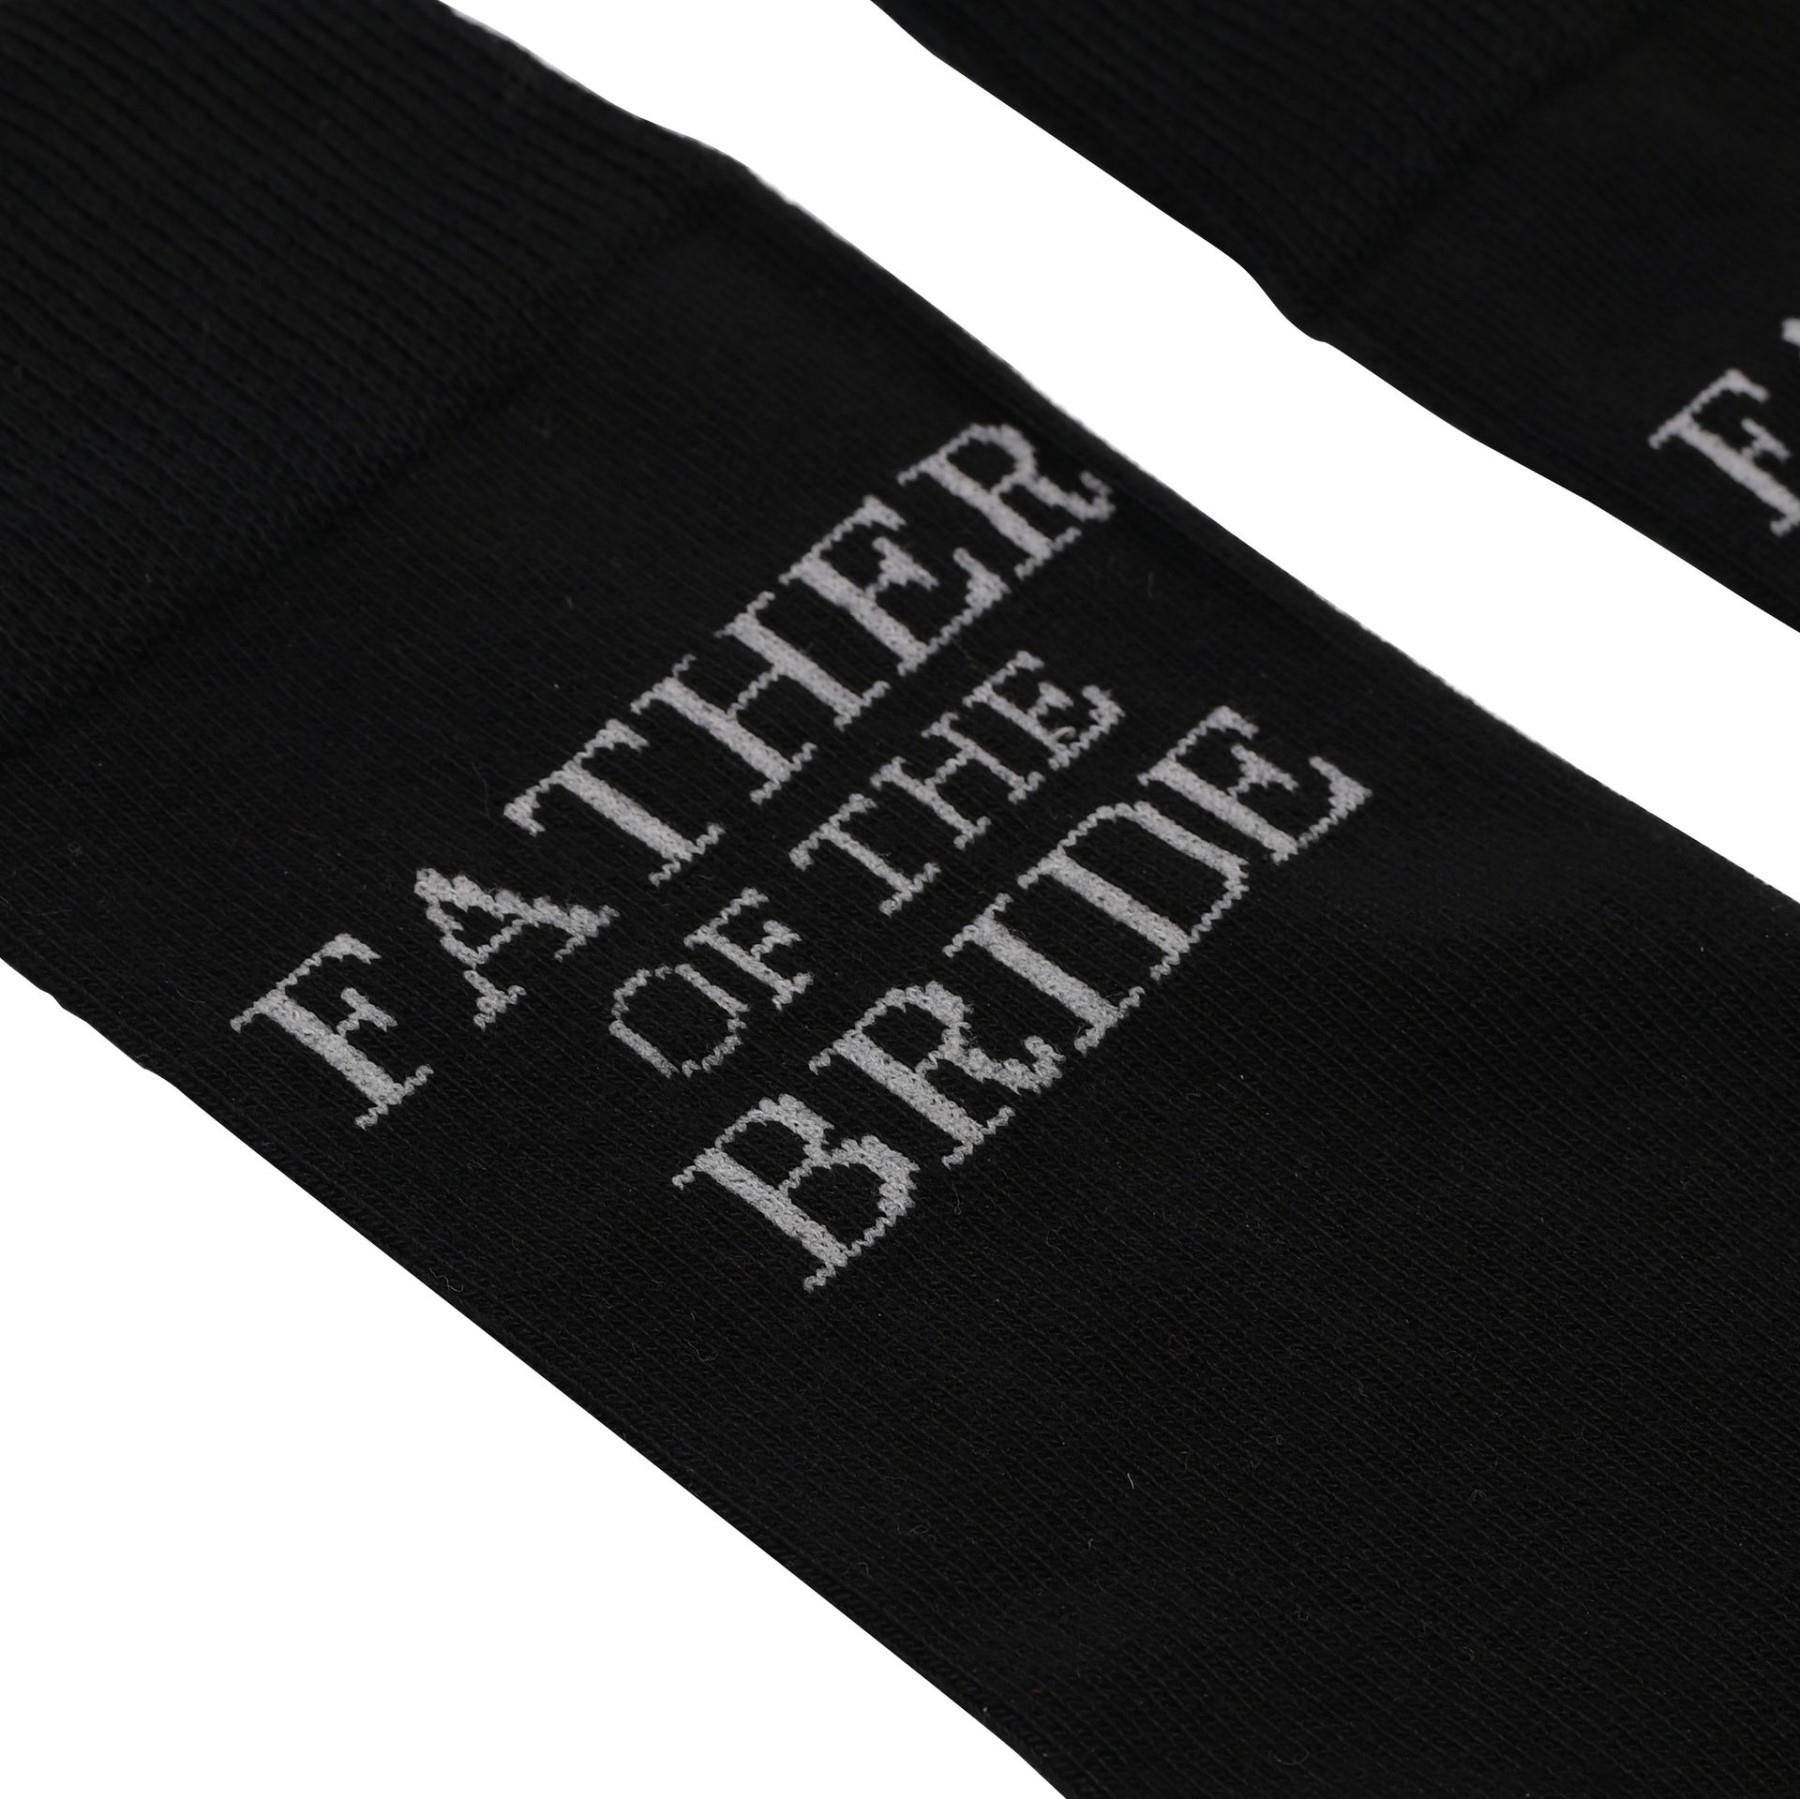 Men's Black Socks Wedding Gift - Father of the Bride